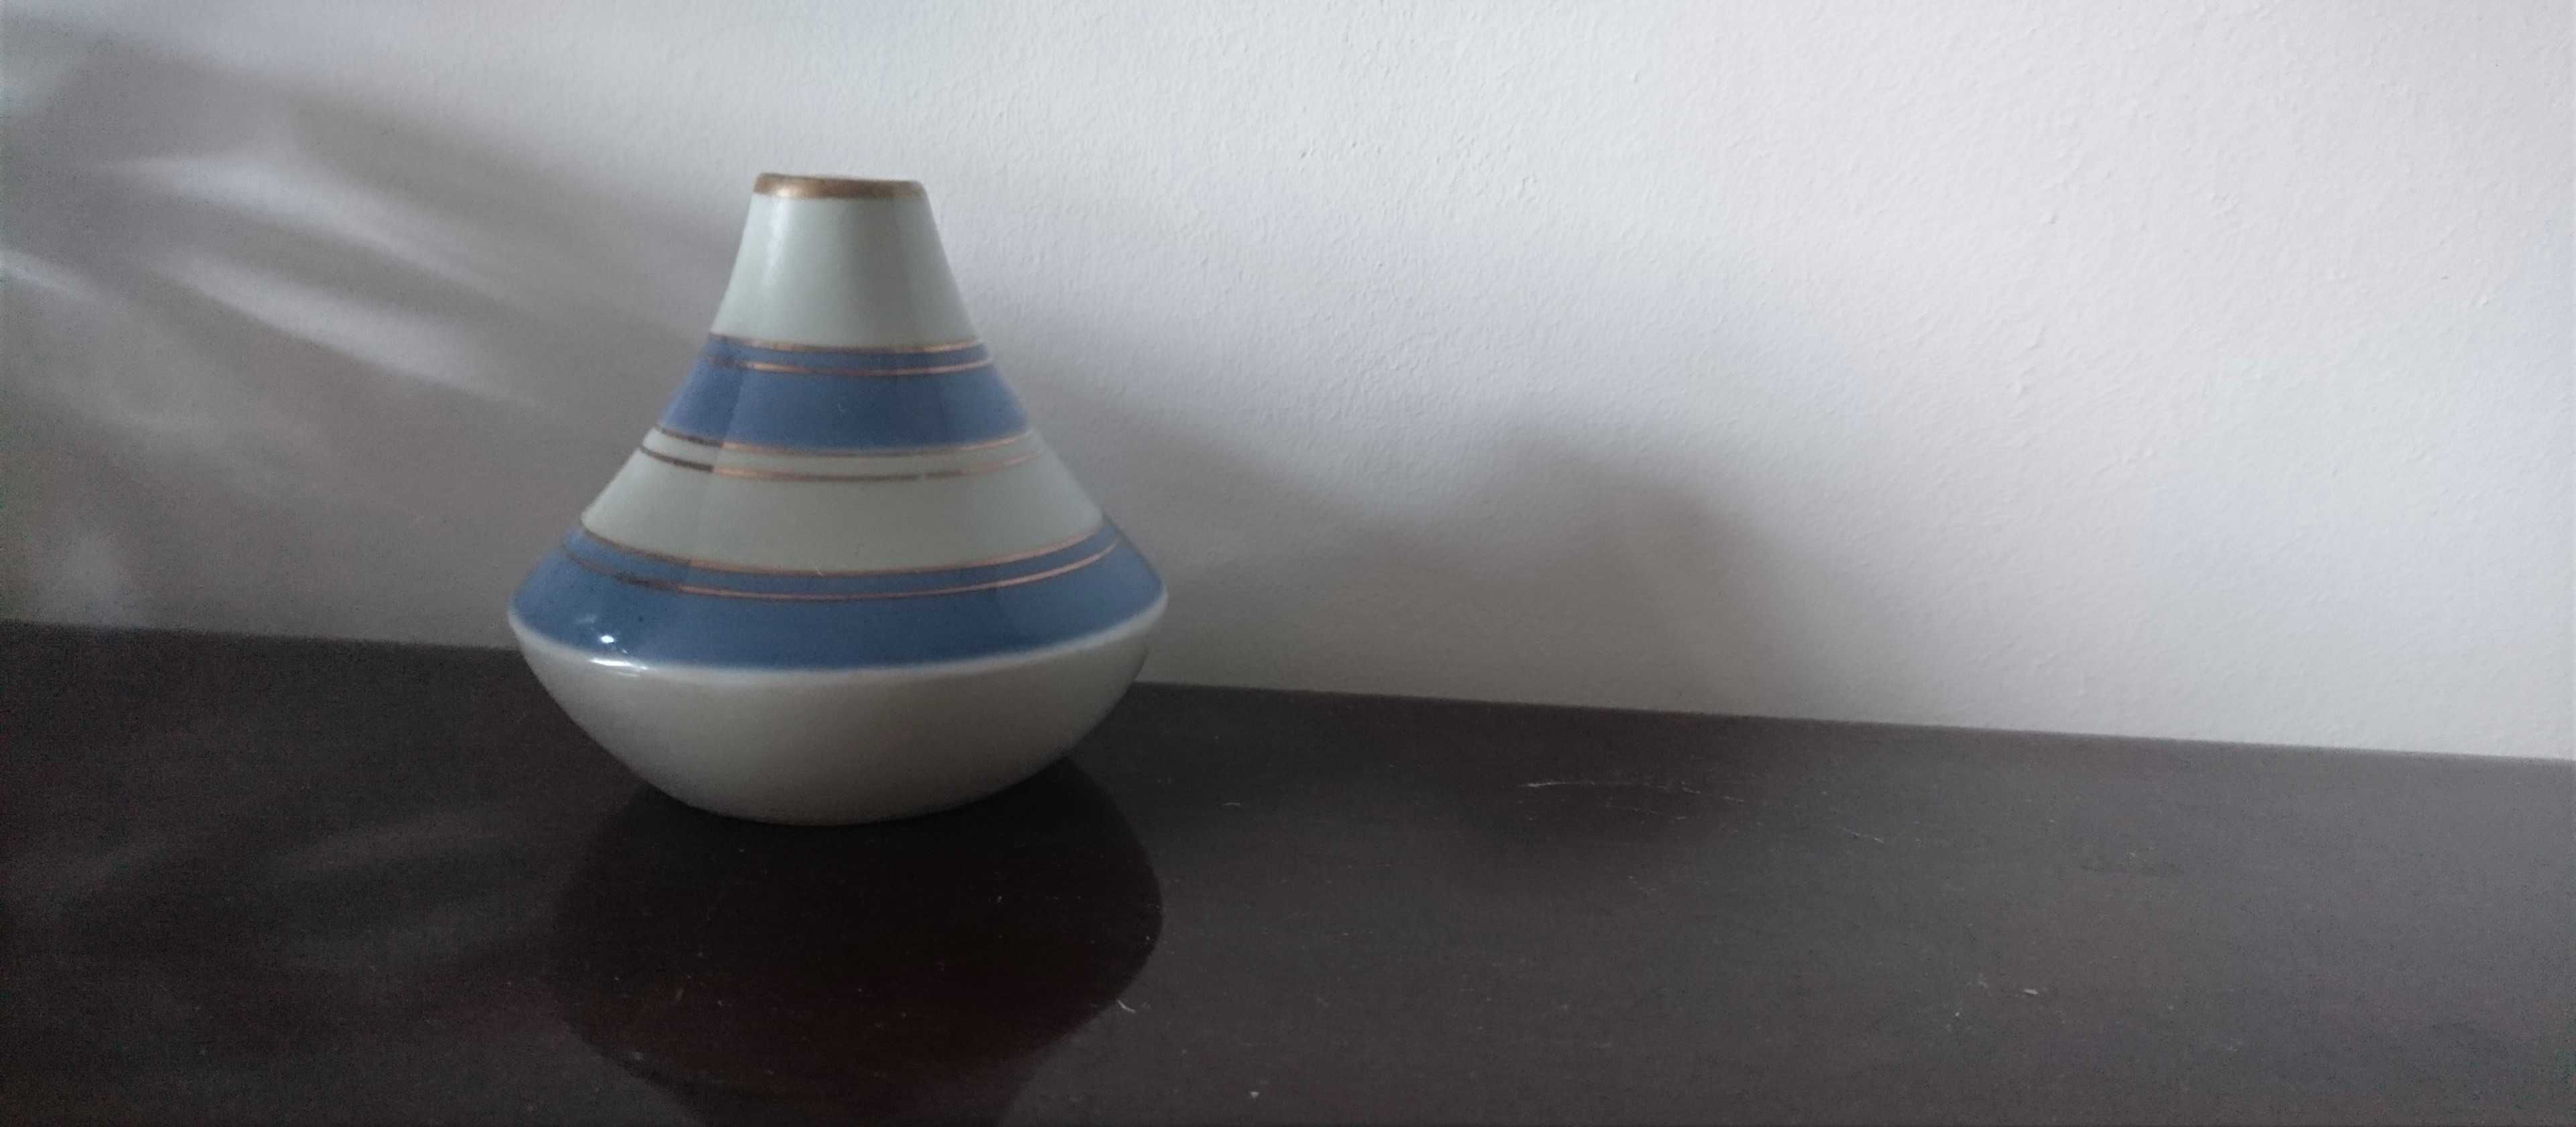 миниатюрная ваза цветное стекло винтаж ретро вазочка Рига времен СССР